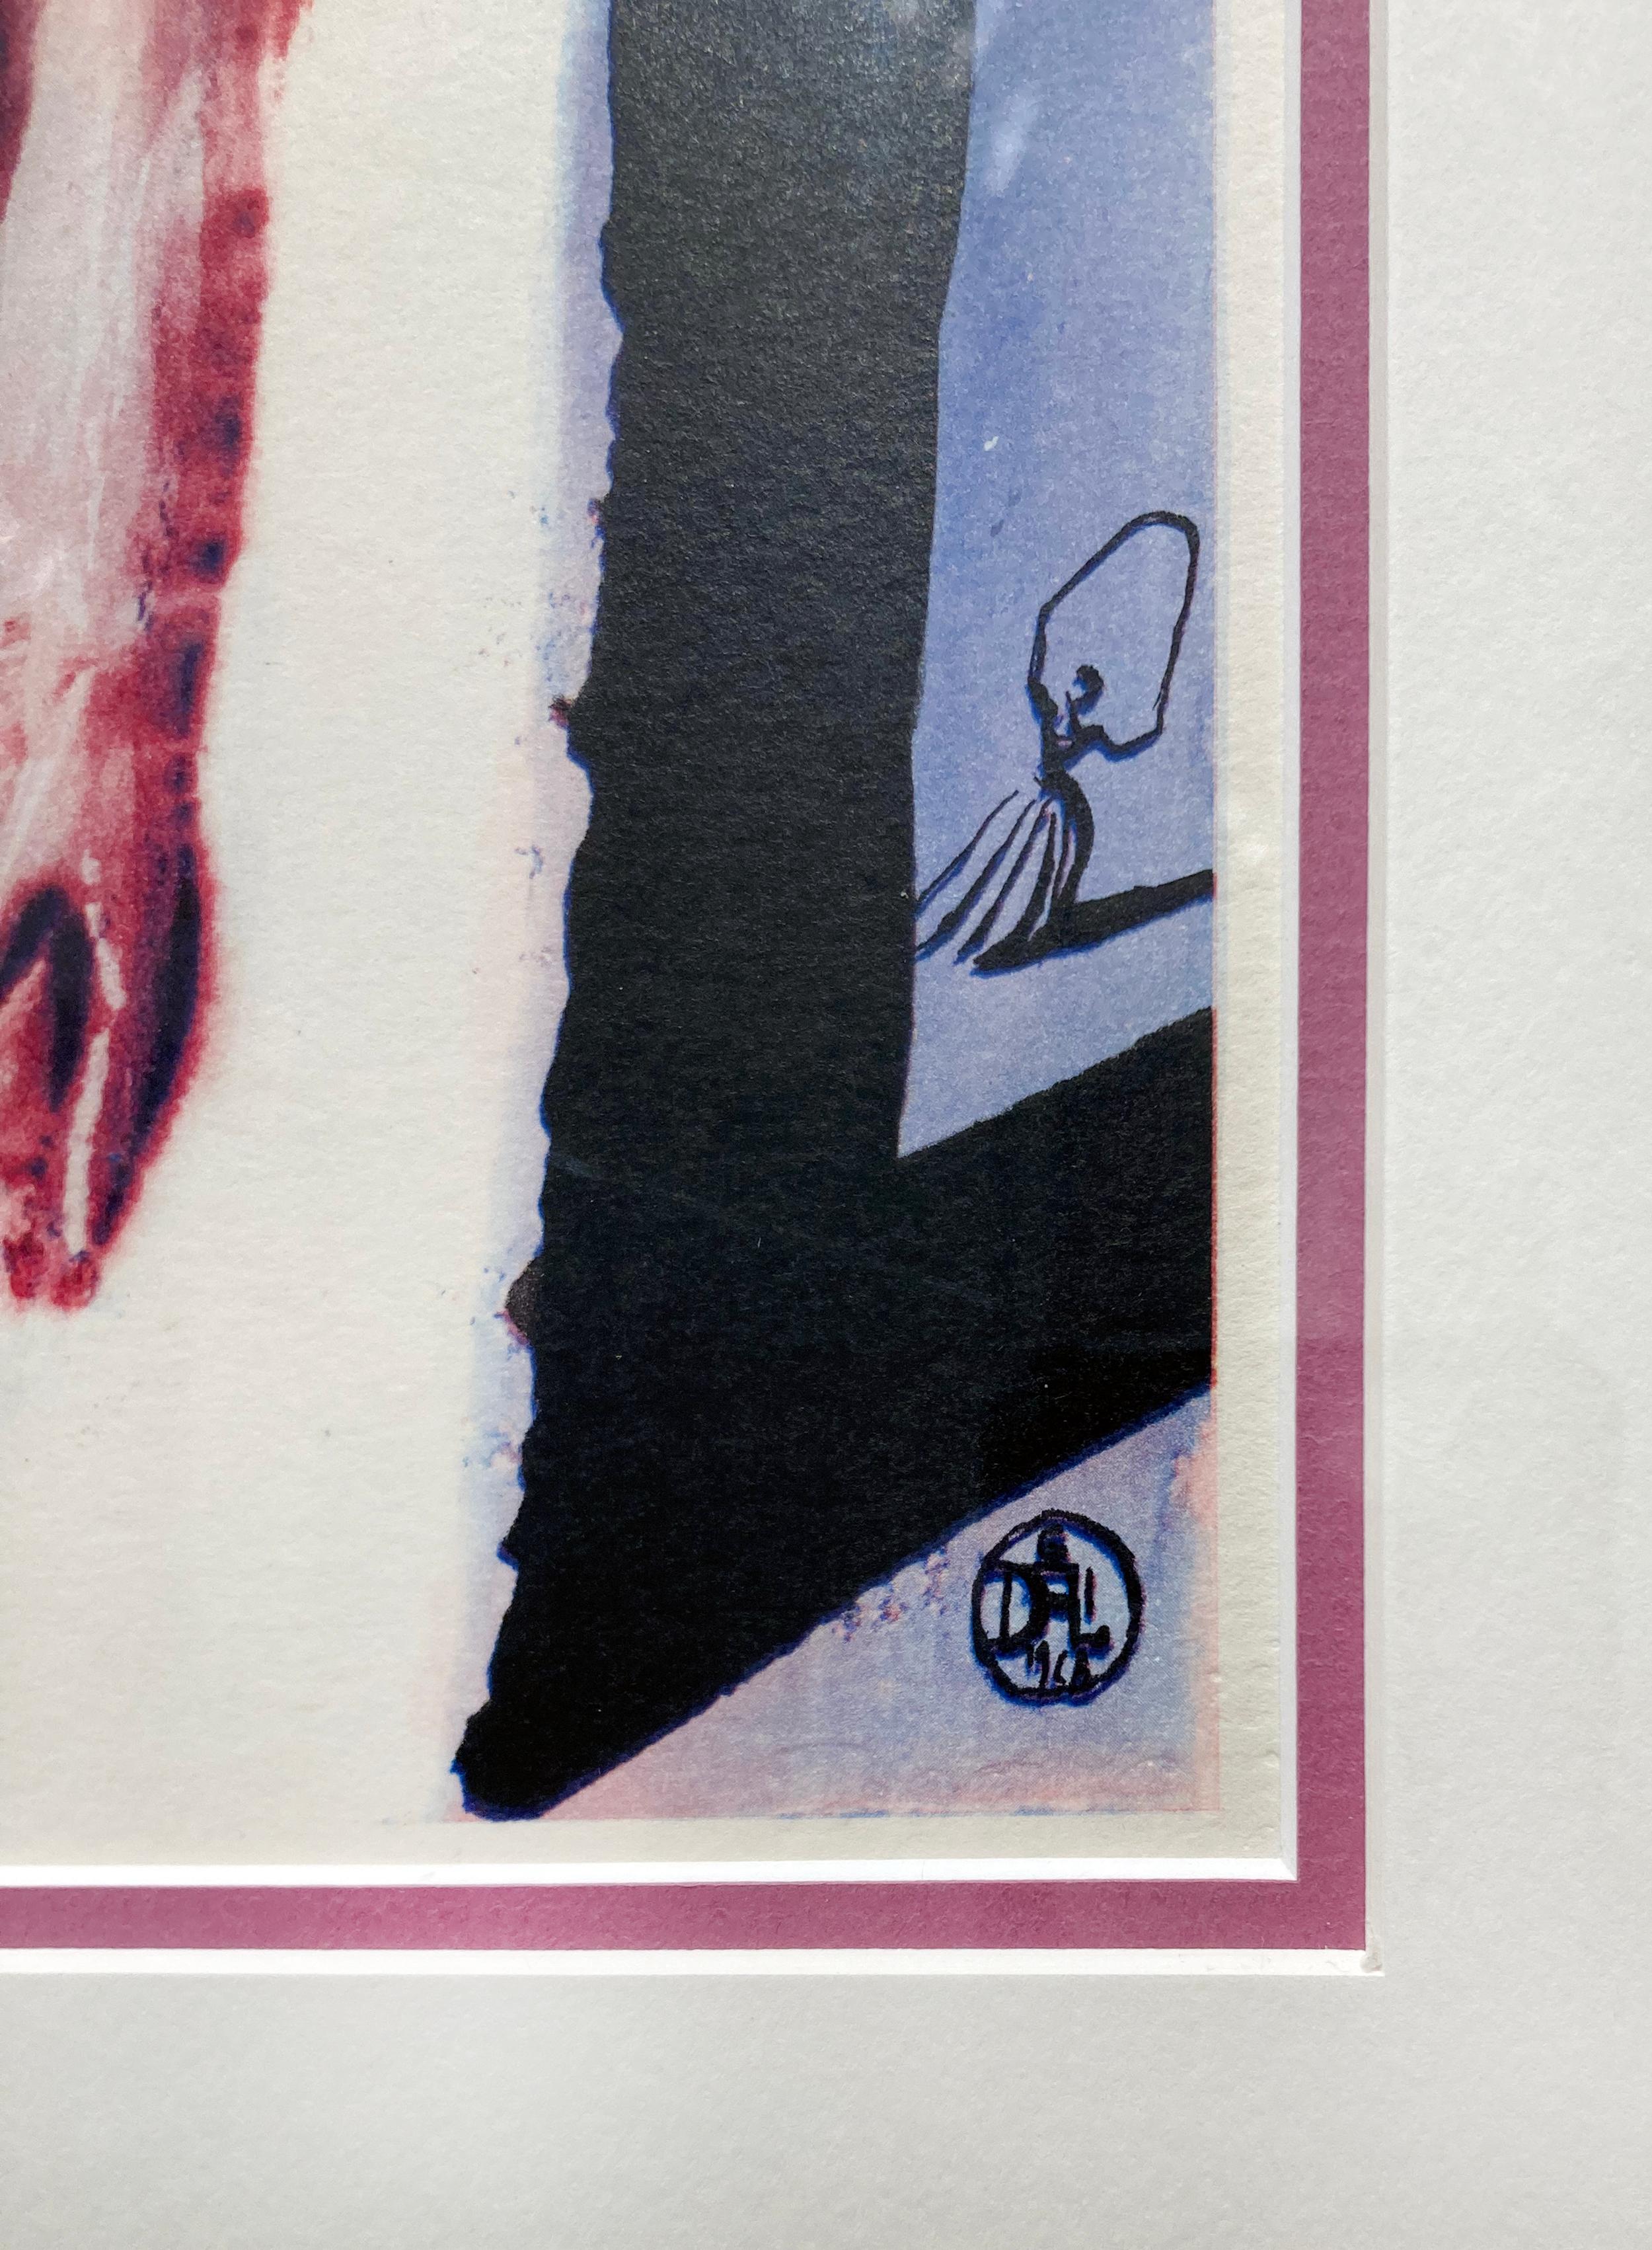 Artist:  Dali, Salvador
Title:  The Rabbit Sends in a Little Bill
Series:  Alice in Wonderland
Date:  1969
Medium:  Photogravure printed in color
Unframed Dimensions:  15.10